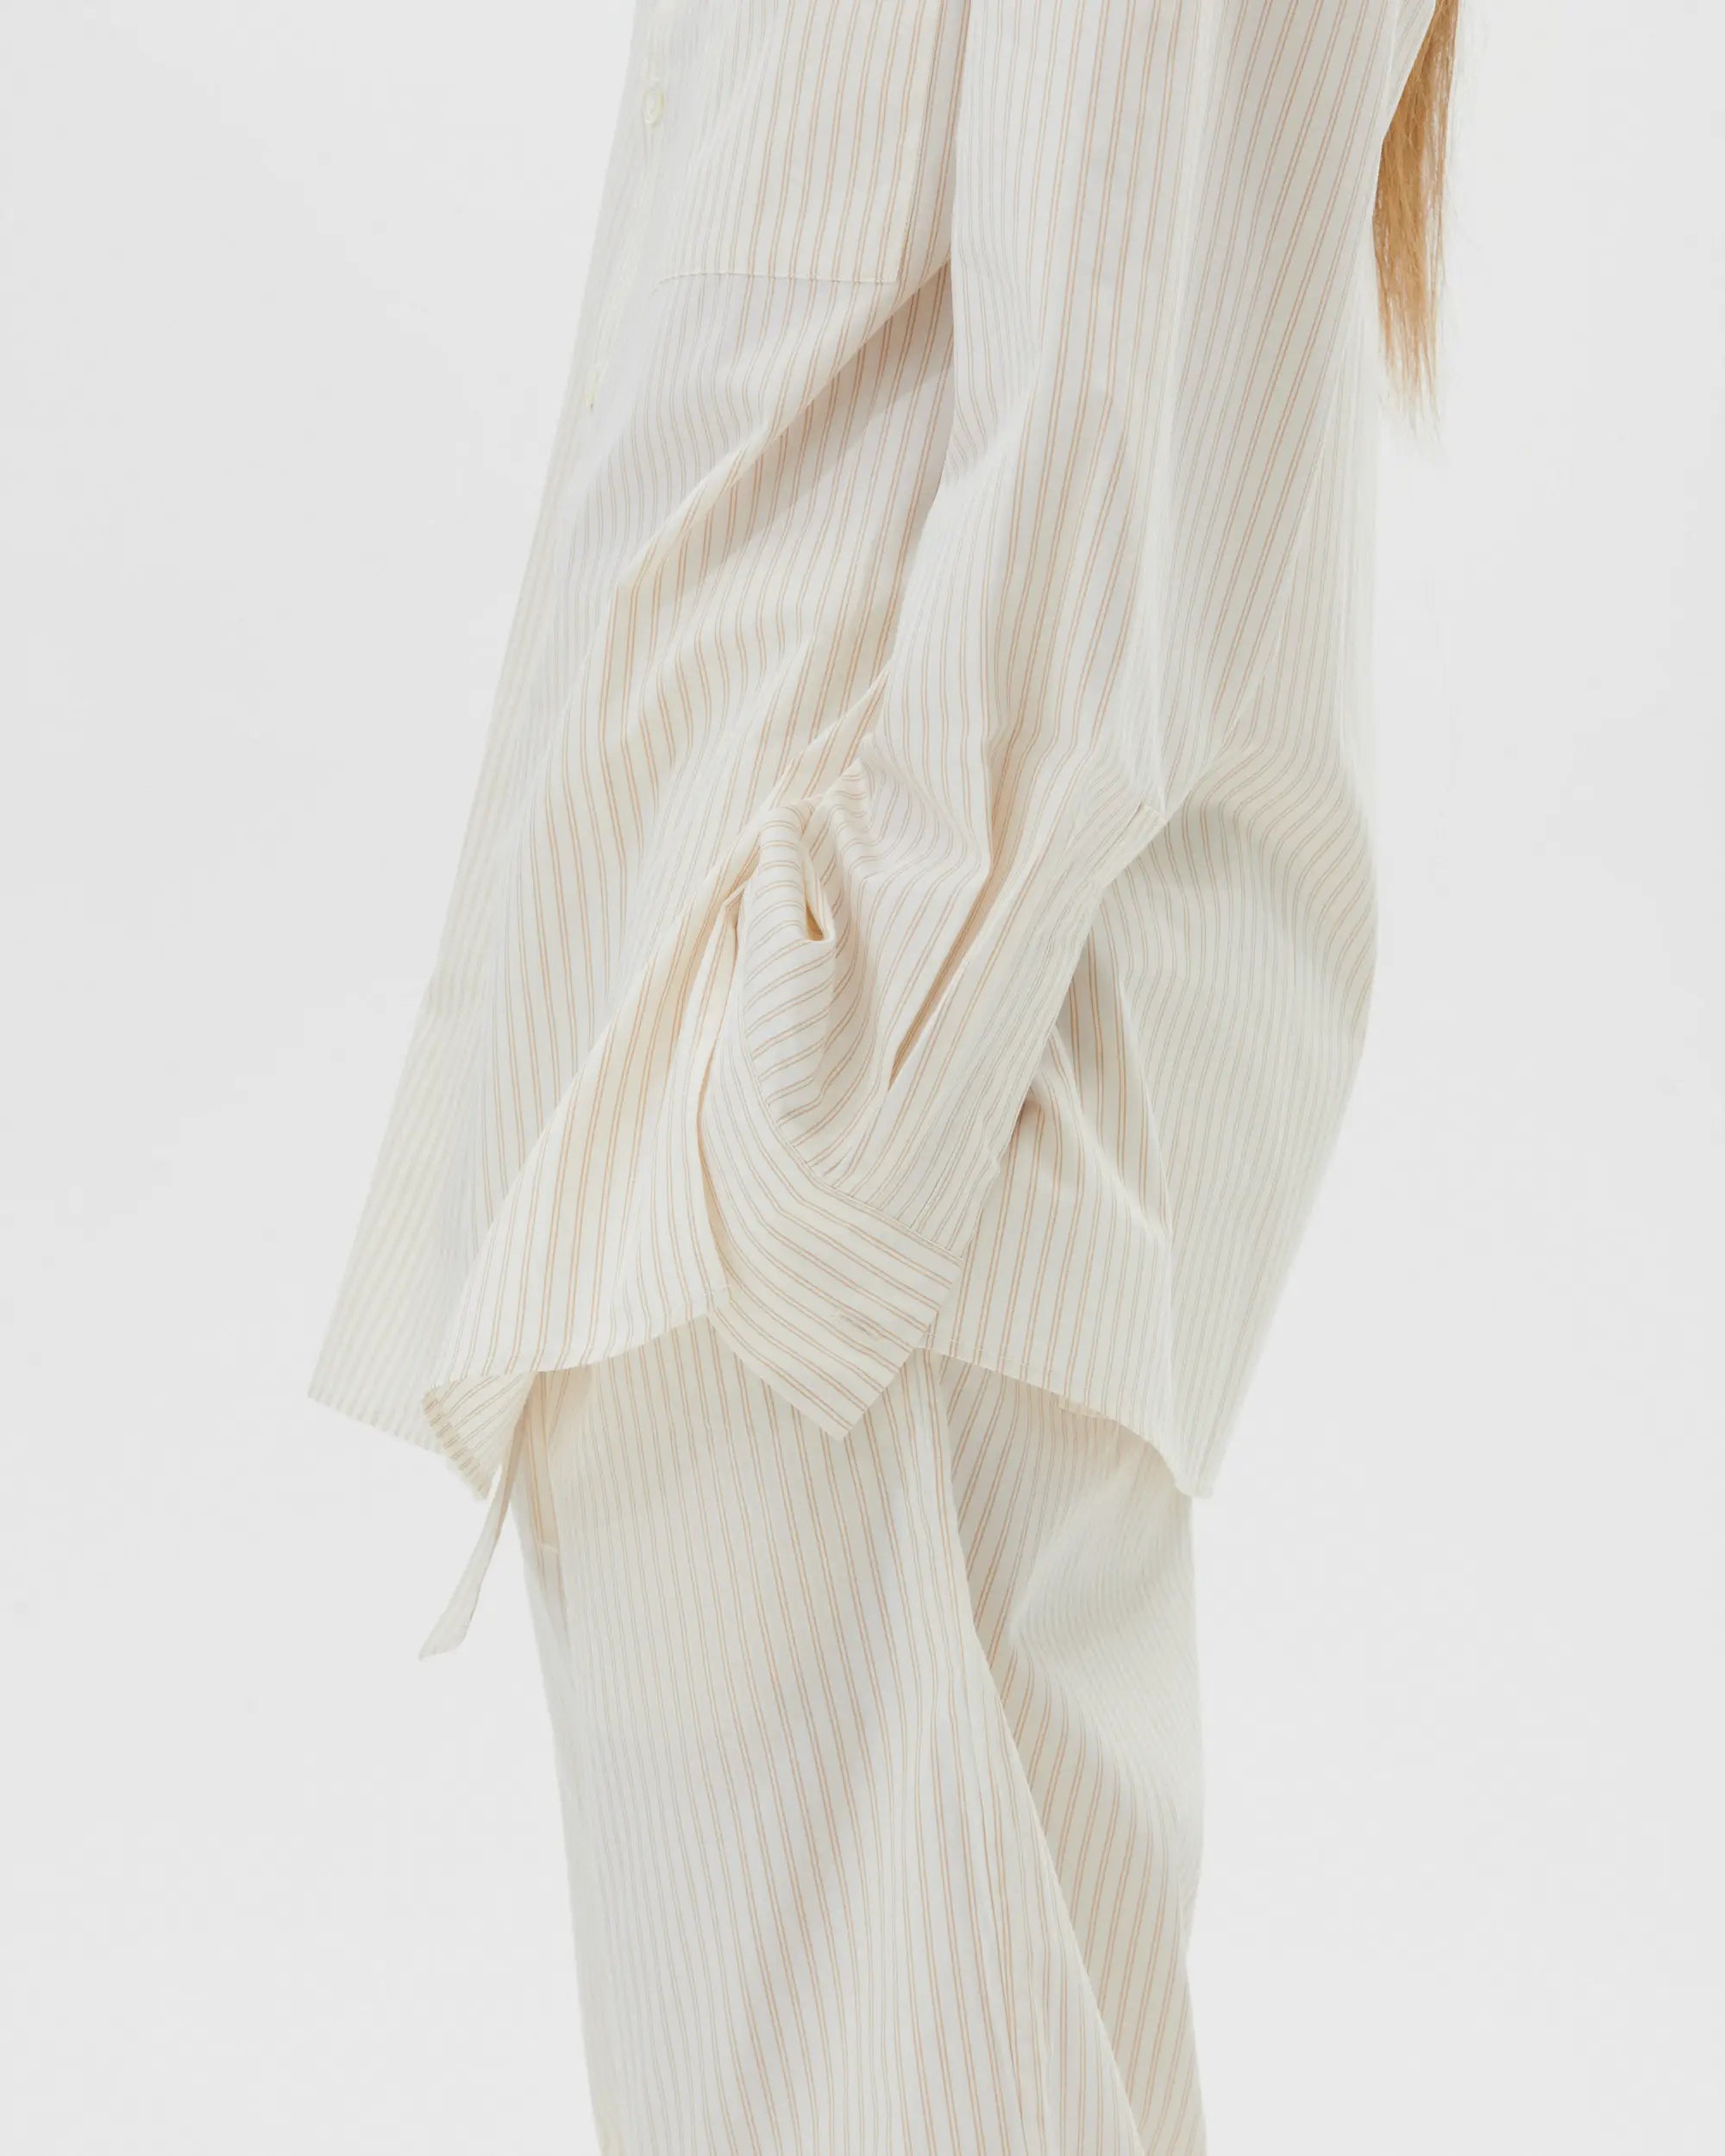 Tekla x Birkenstock Cotton Pants - Wheat Stripes